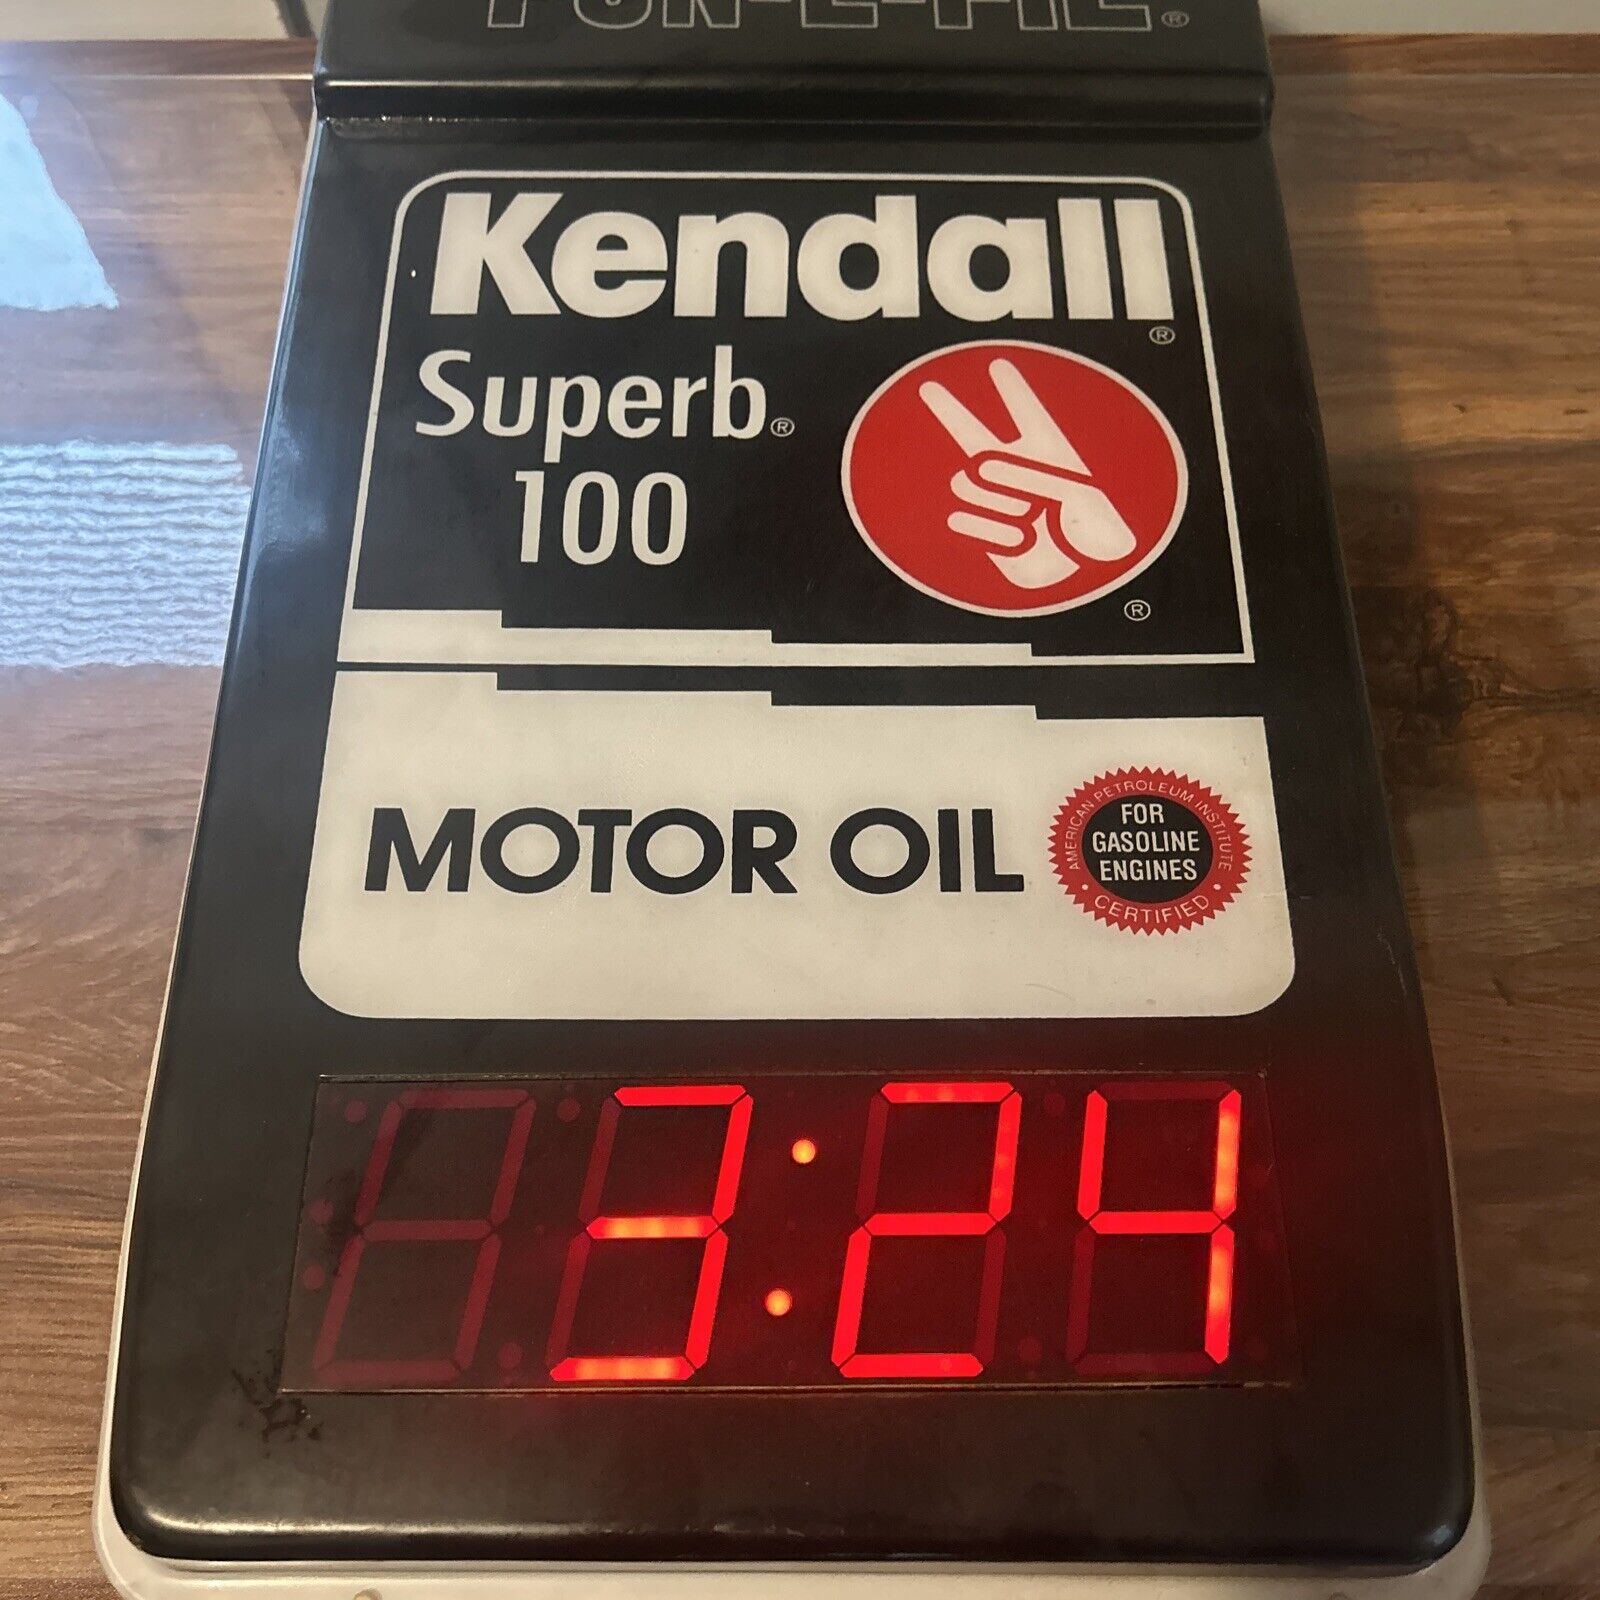 Kendall Superb 100 Motor Oil Bottle Fun-L-Fil - Lighted Sign Clock Dualite Inc.